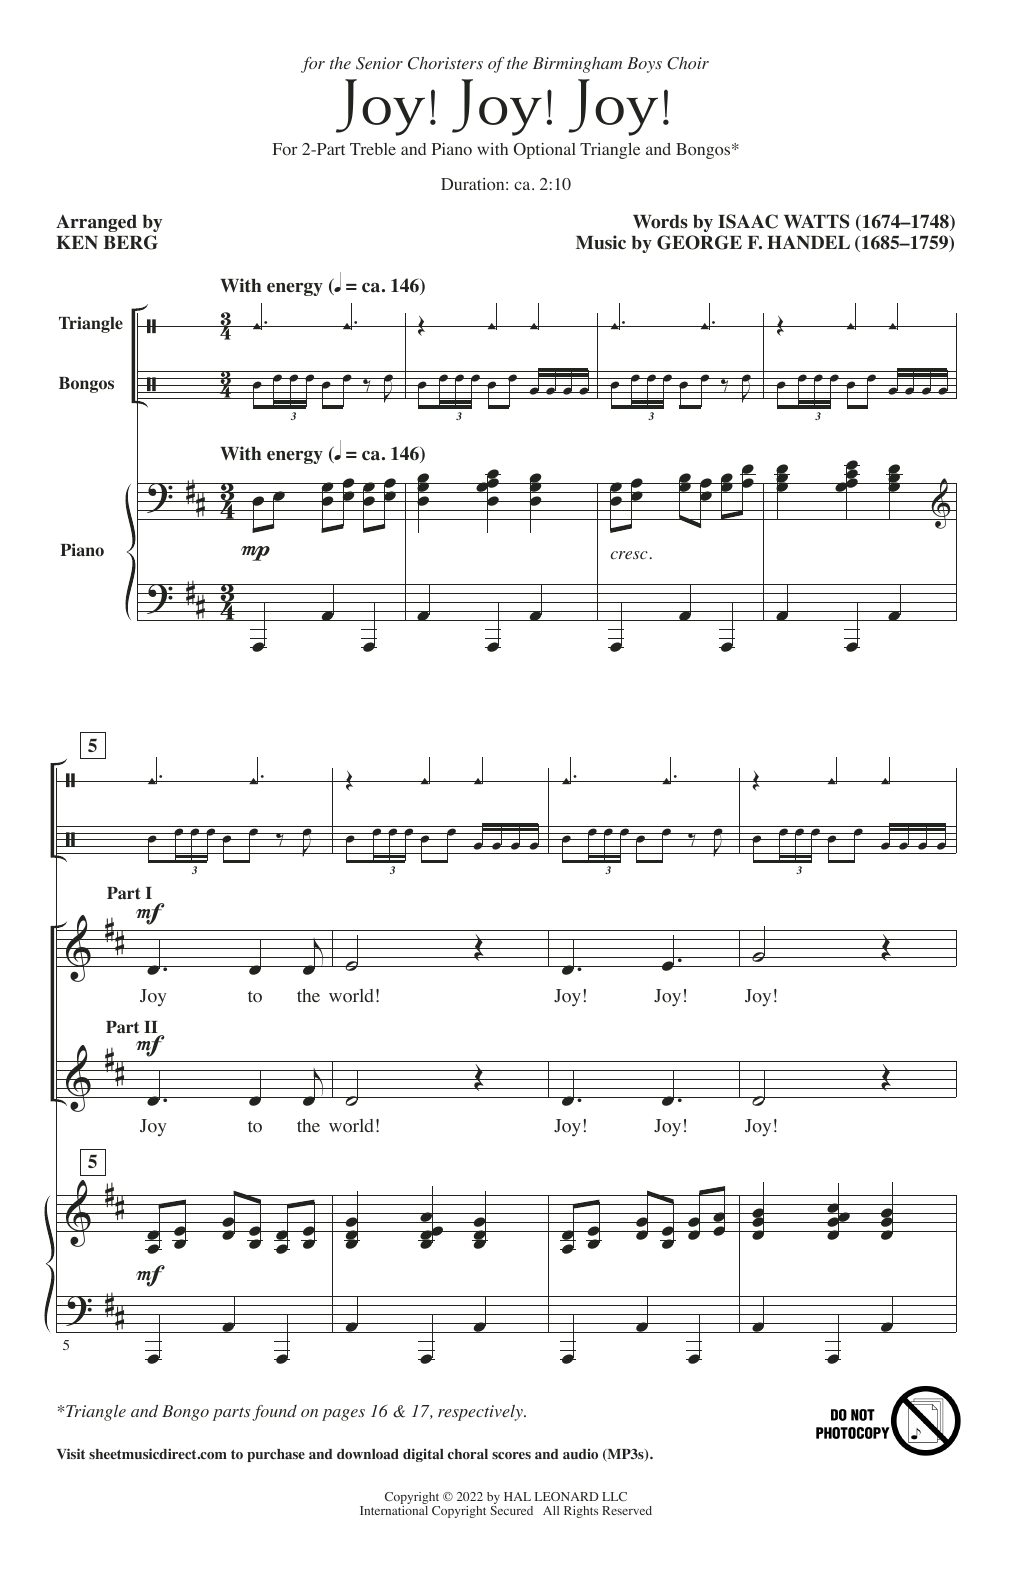 George F. Handel Joy! Joy! Joy! (arr. Ken Berg) Sheet Music Notes & Chords for 2-Part Choir - Download or Print PDF